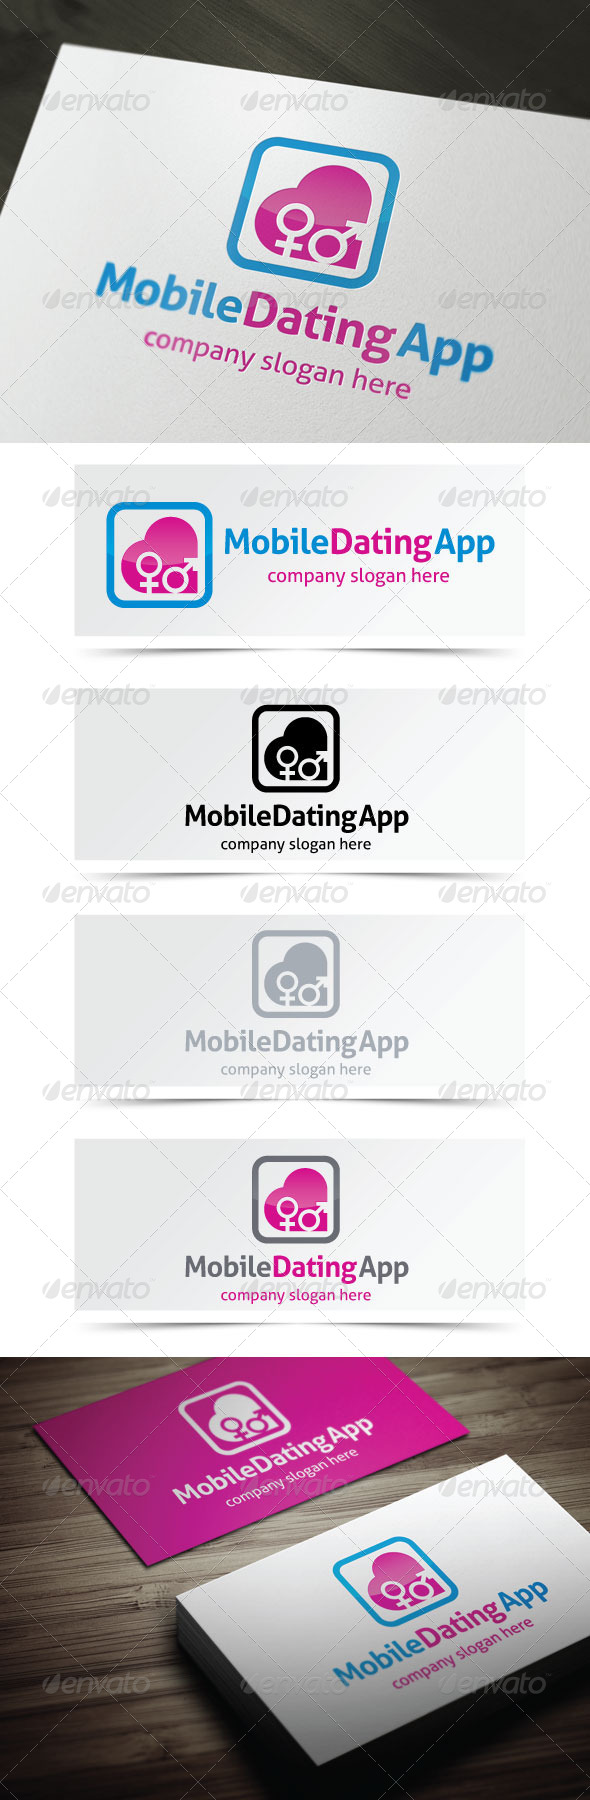 Mobile Dating App